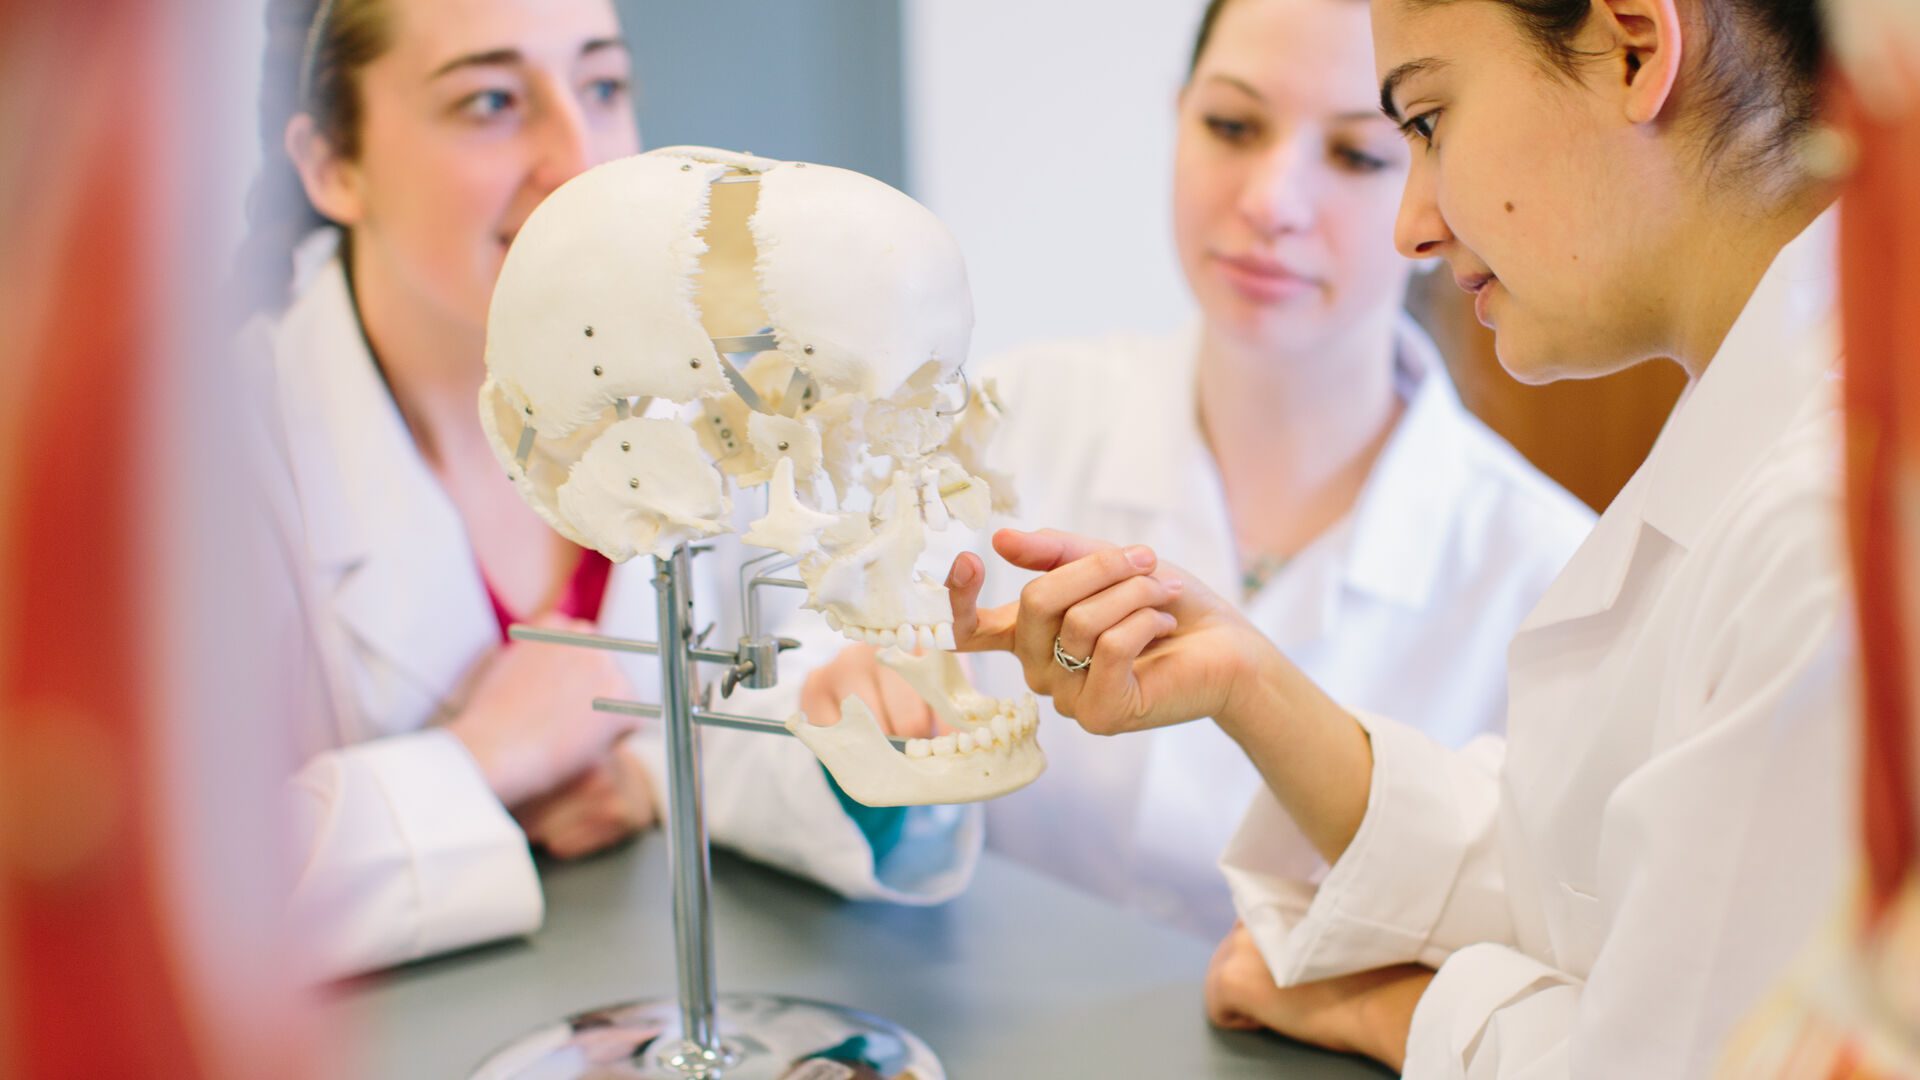 Houghton biology students looking at skull model.